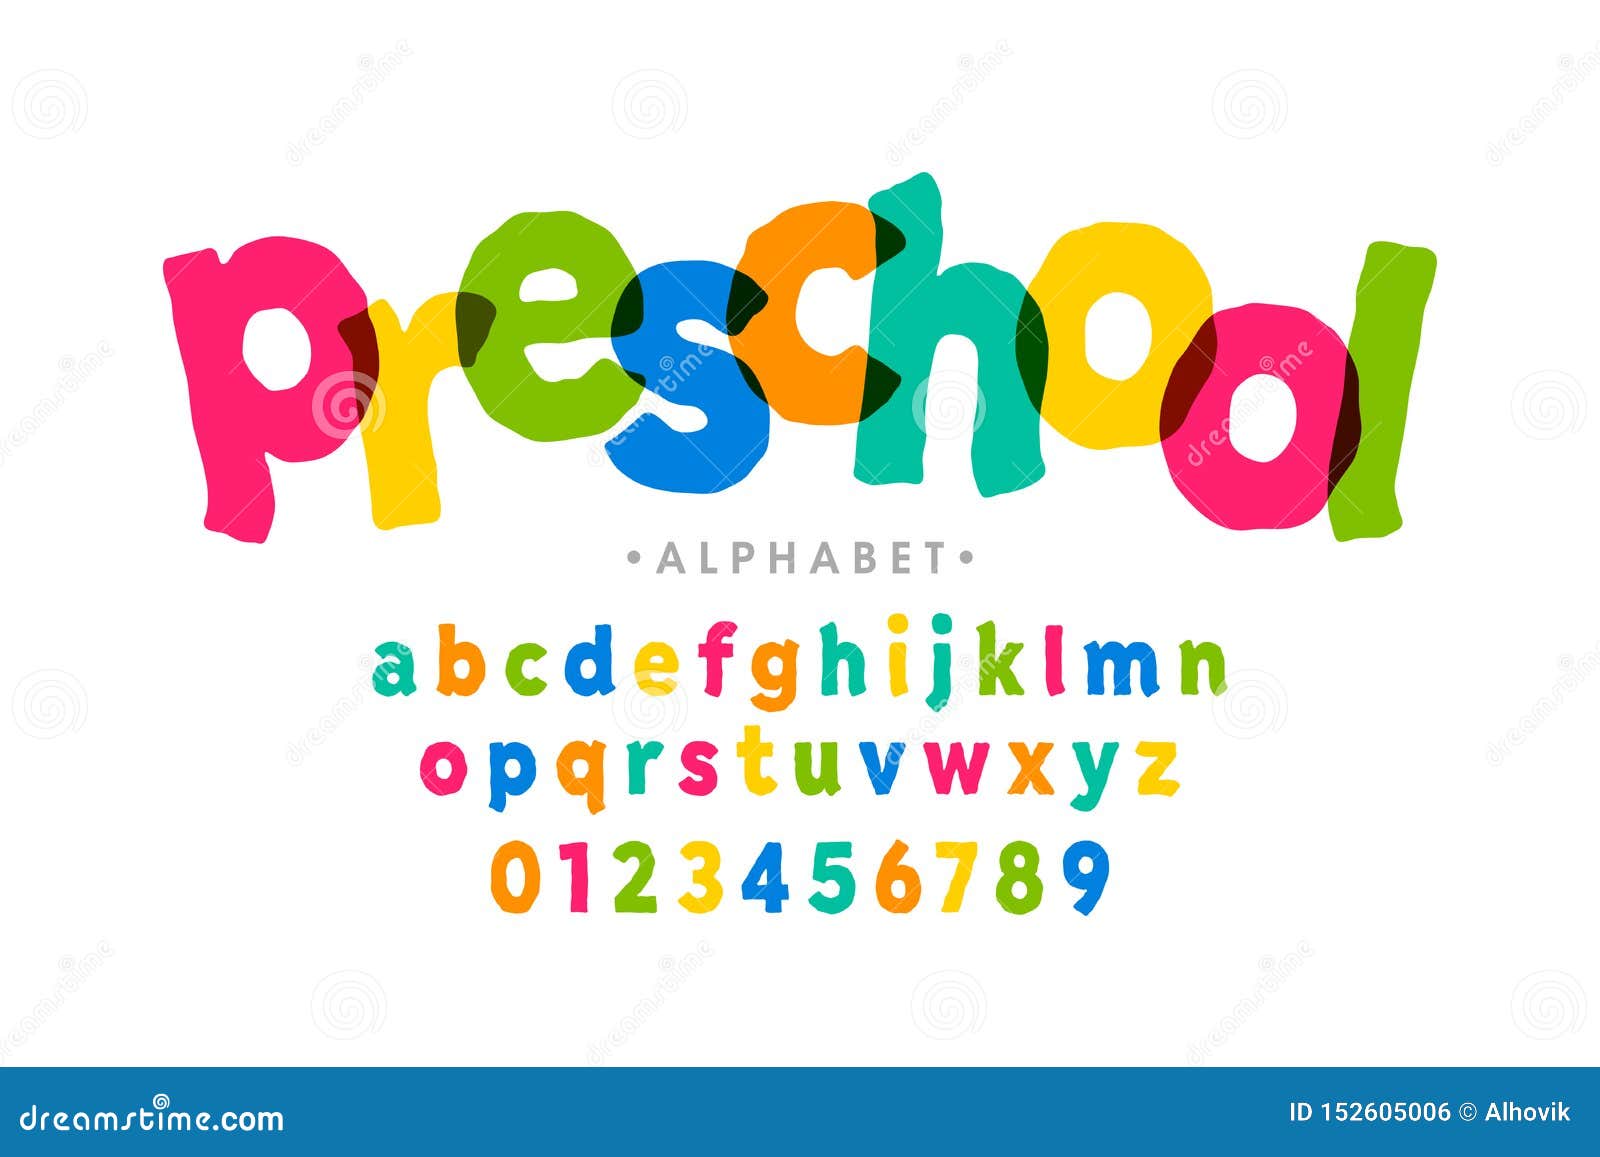 preschool, kids style colorful font